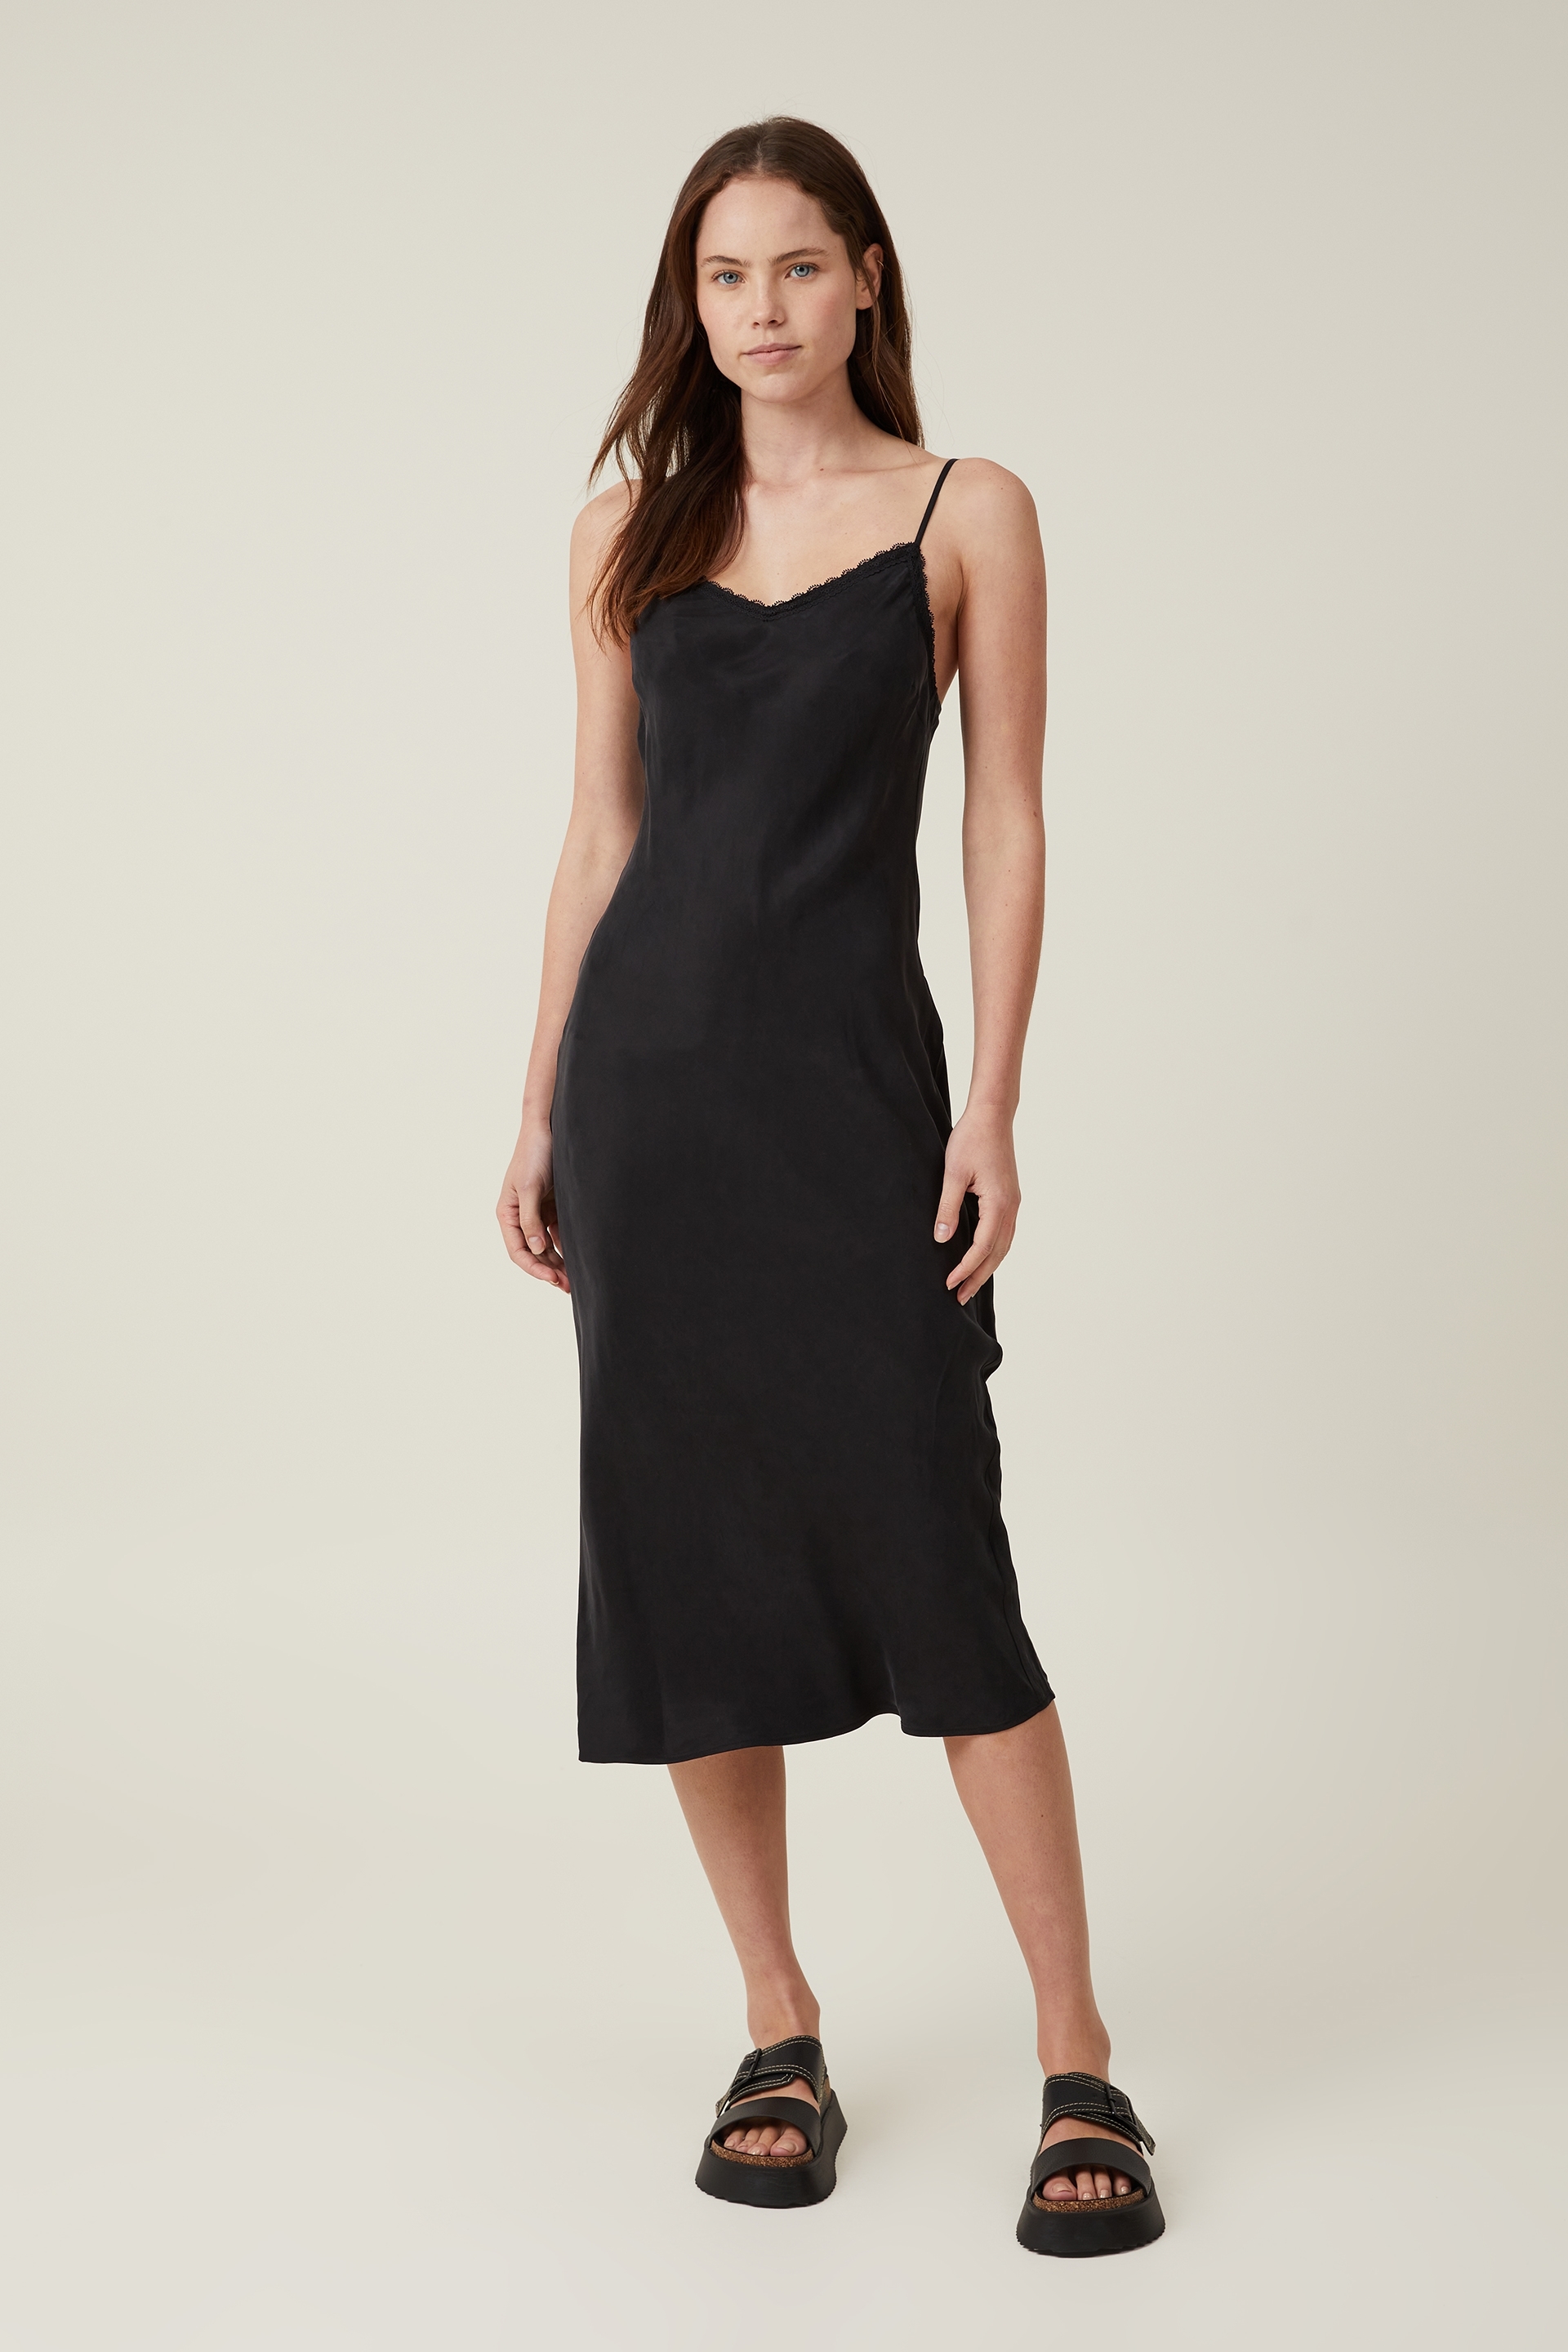 Cotton On Women - Cleo Cupro Midi Dress - Black